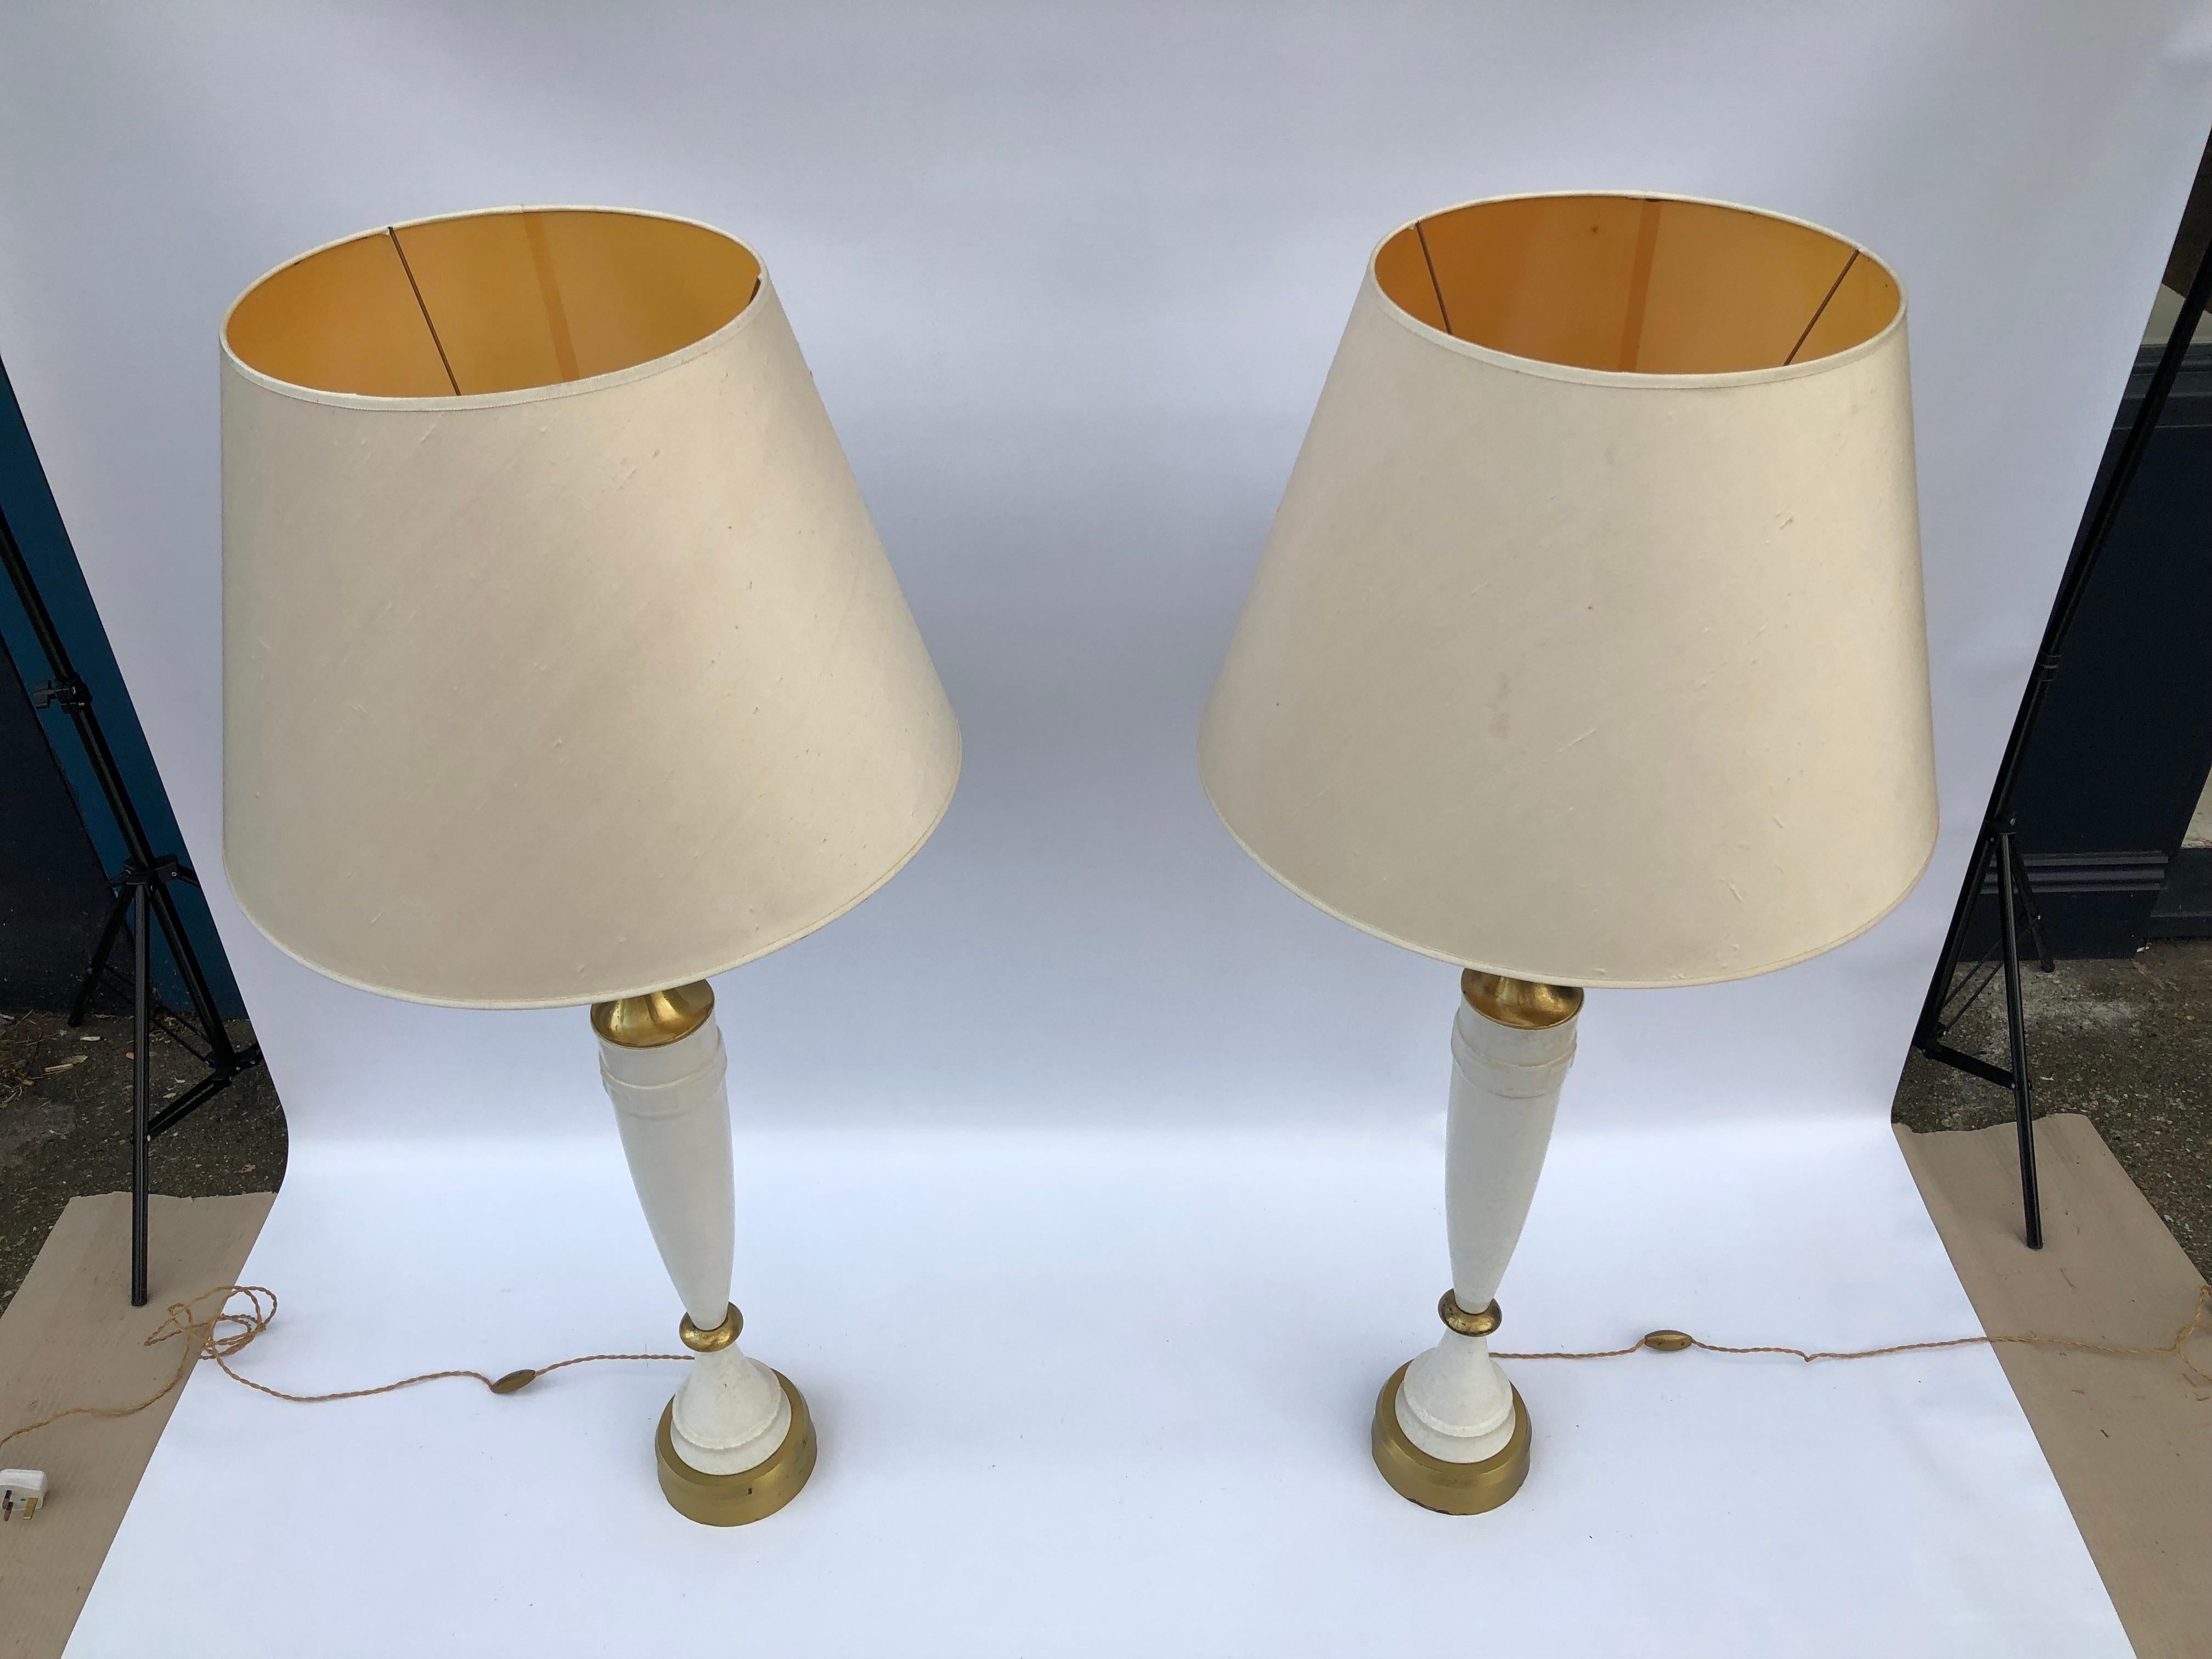 British Laurel Greek Key Ceramic Brass Table Lamps 1970s Hollywood Regency Neoclassical For Sale